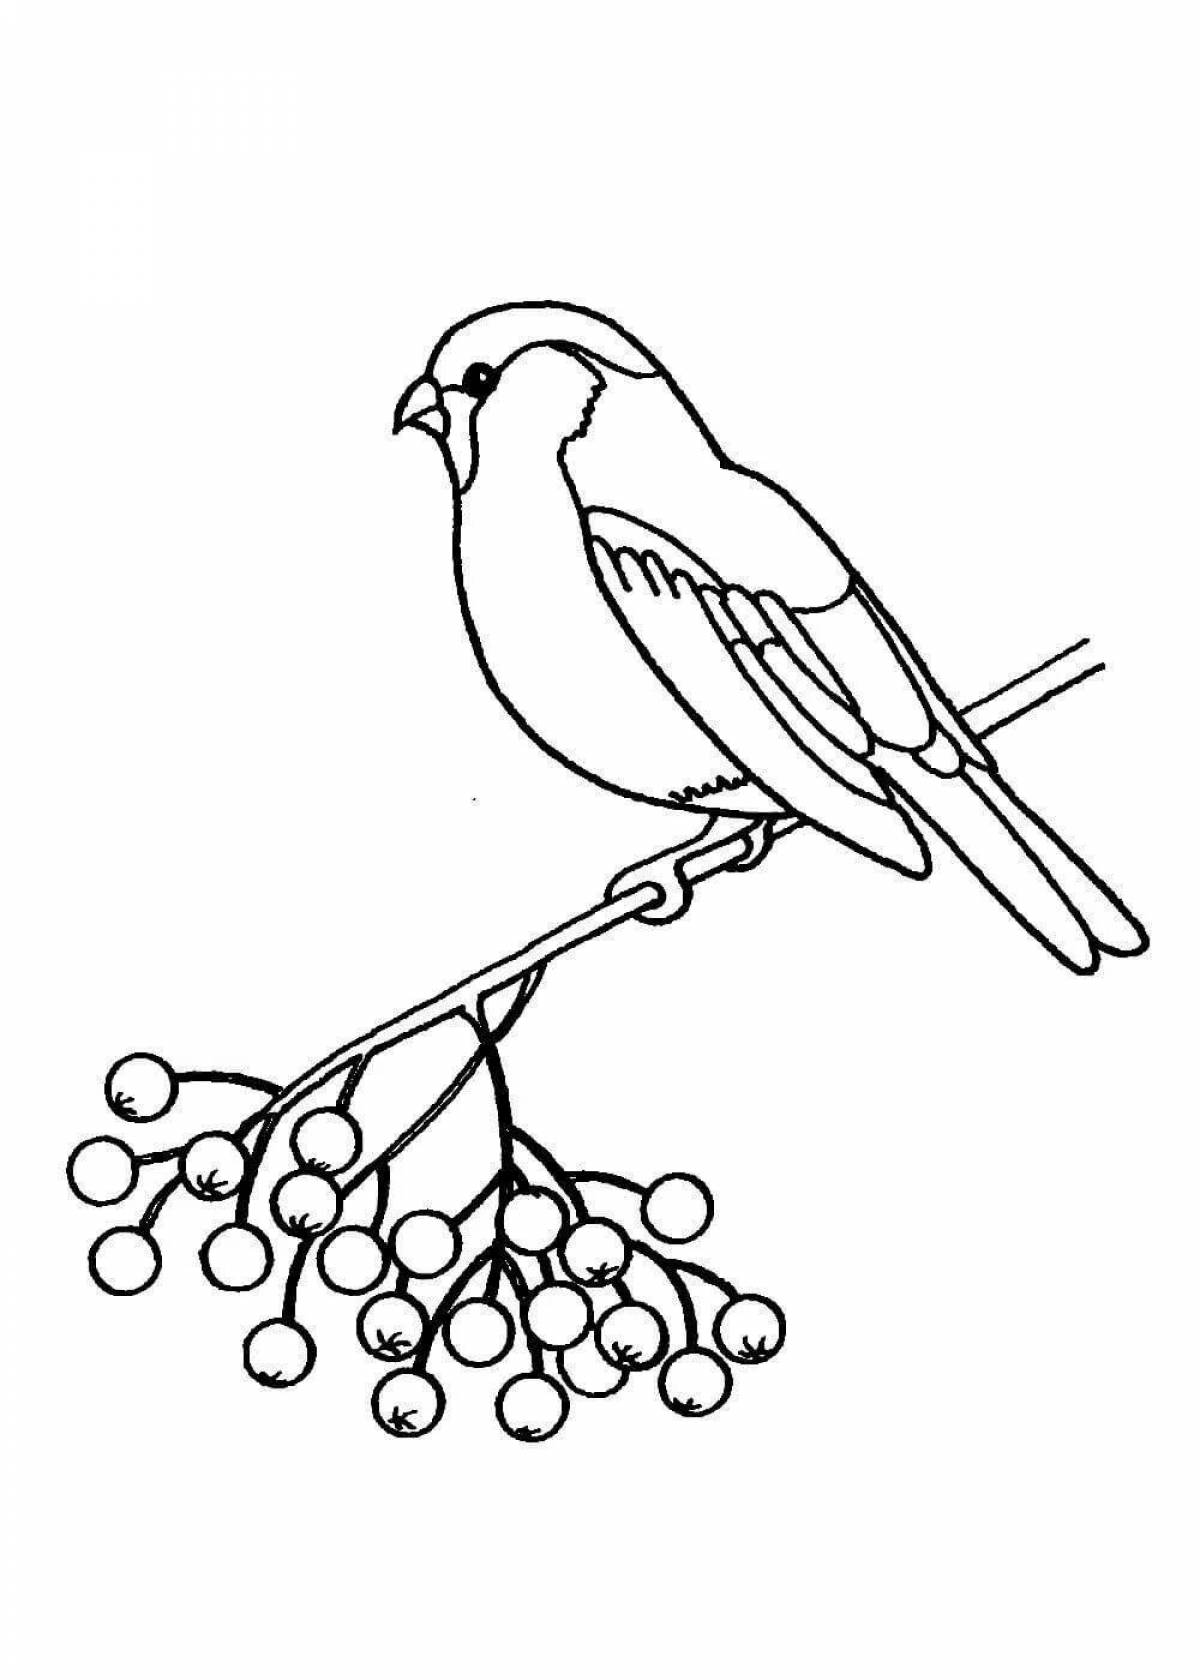 A charming bullfinch draws on a rowan branch